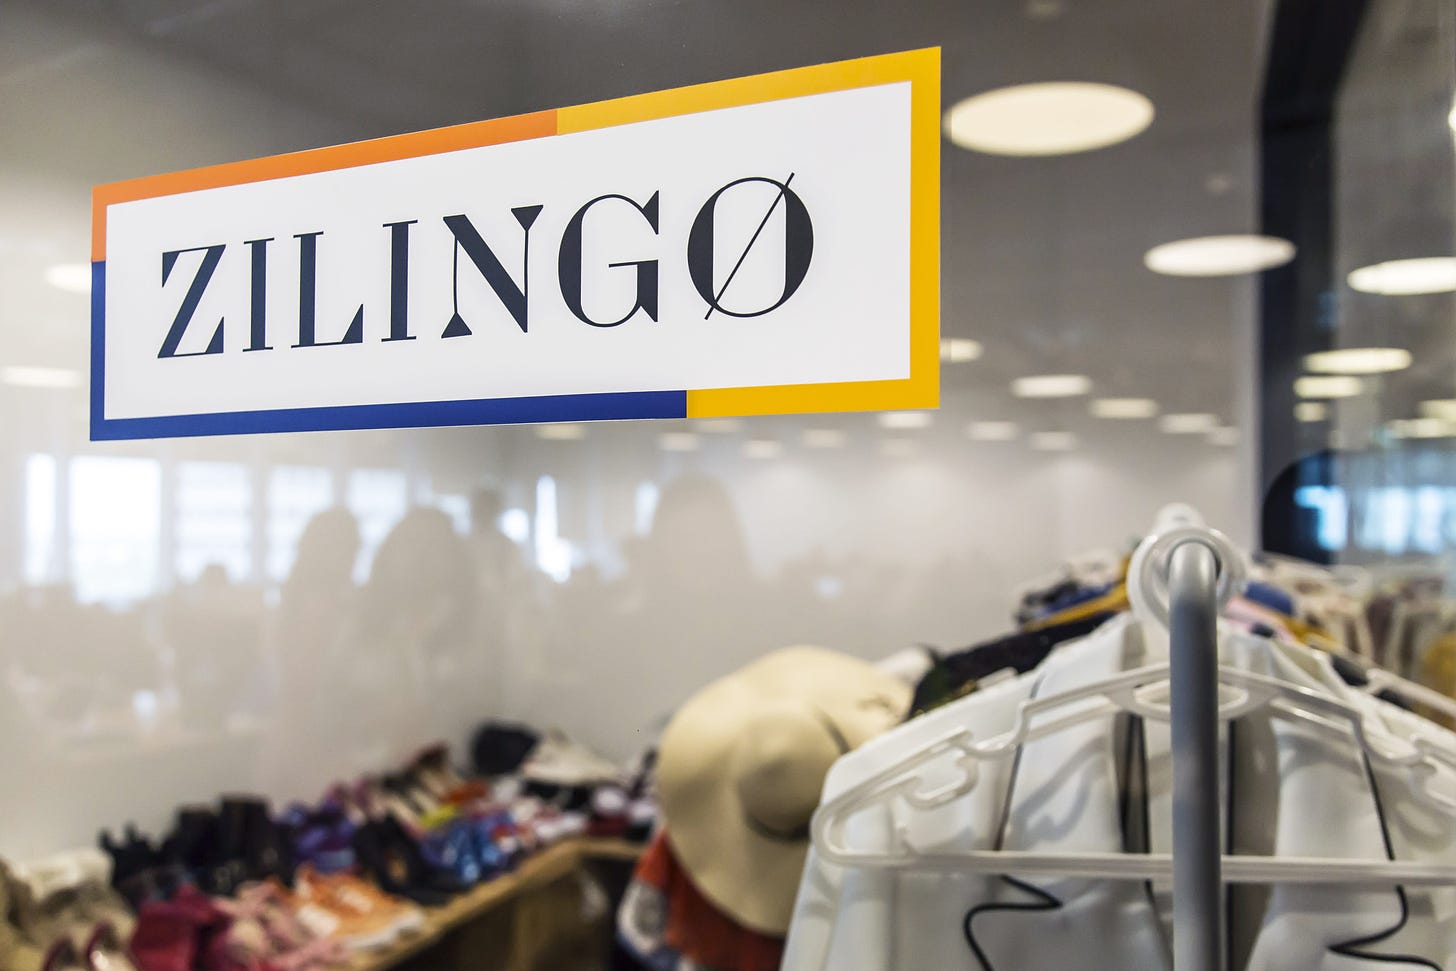 Zilingo says it will help train women entrepreneurs in Indonesia